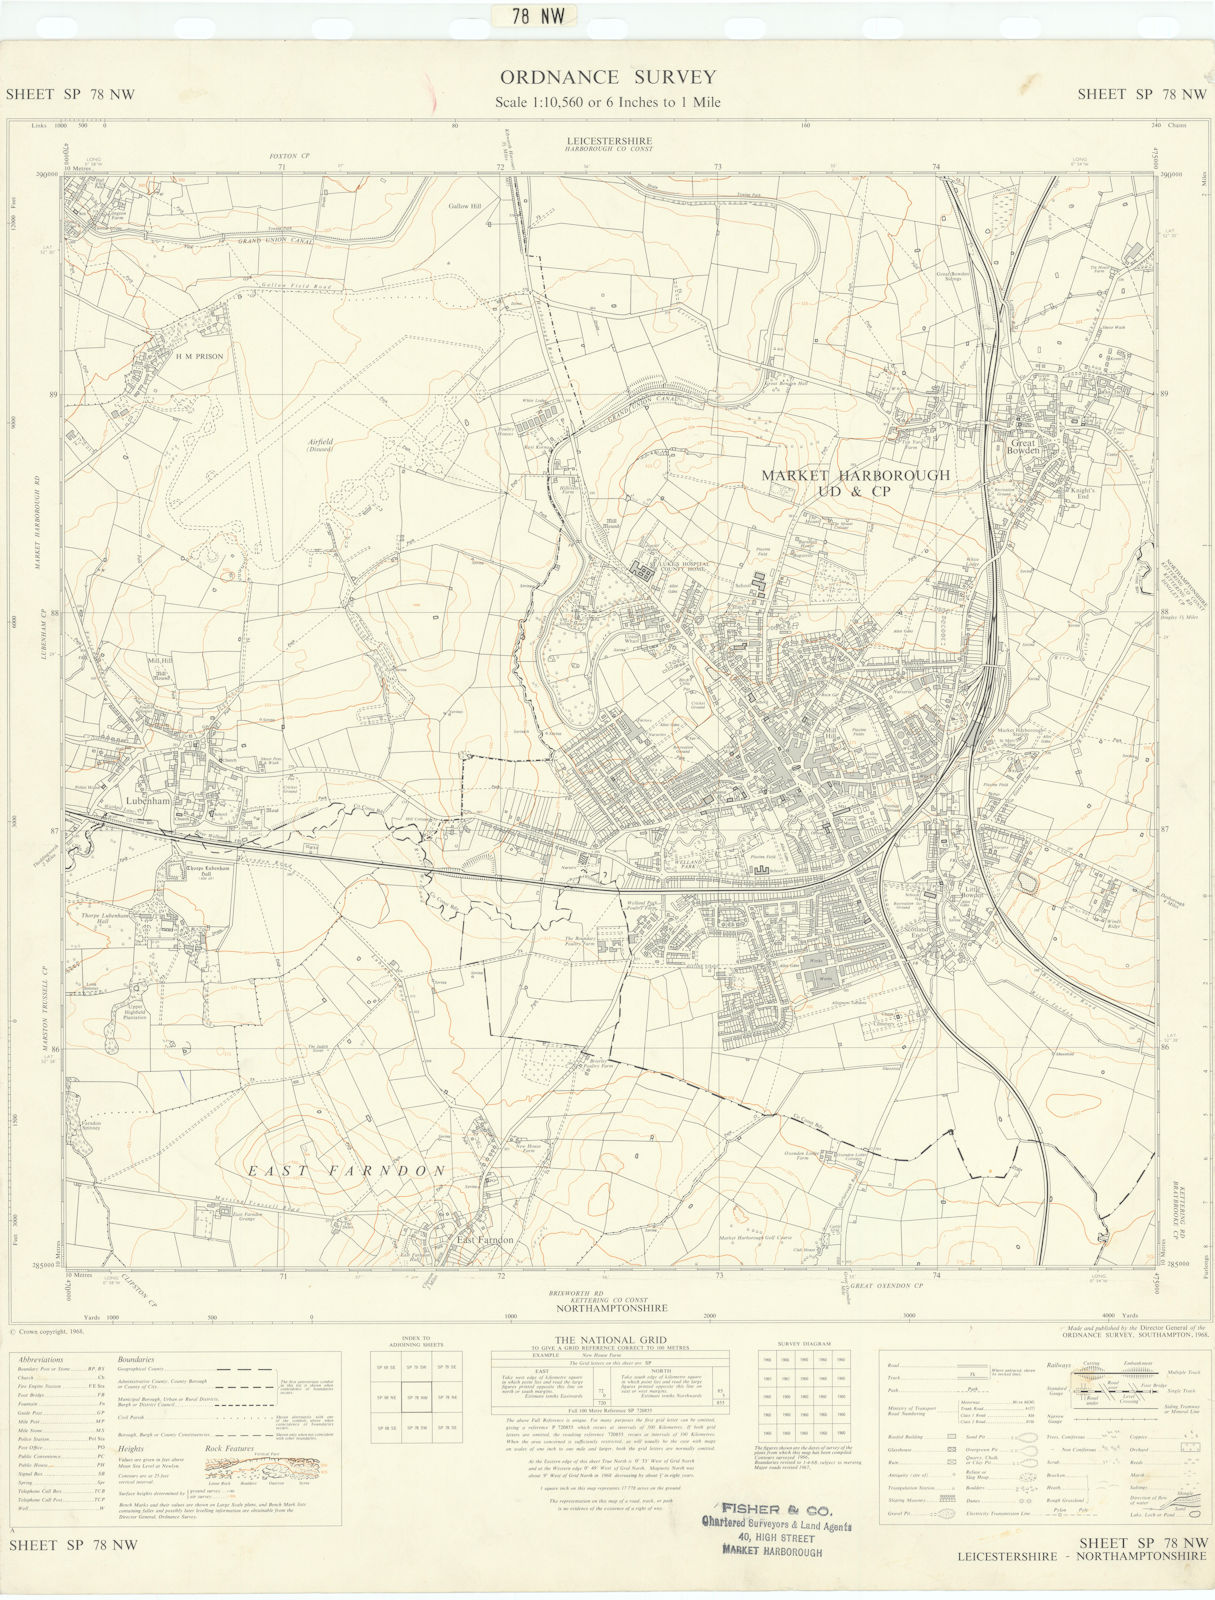 Ordnance Survey SP78NW Leics Markey Harborough Great Bowden Lubenham 1968 map